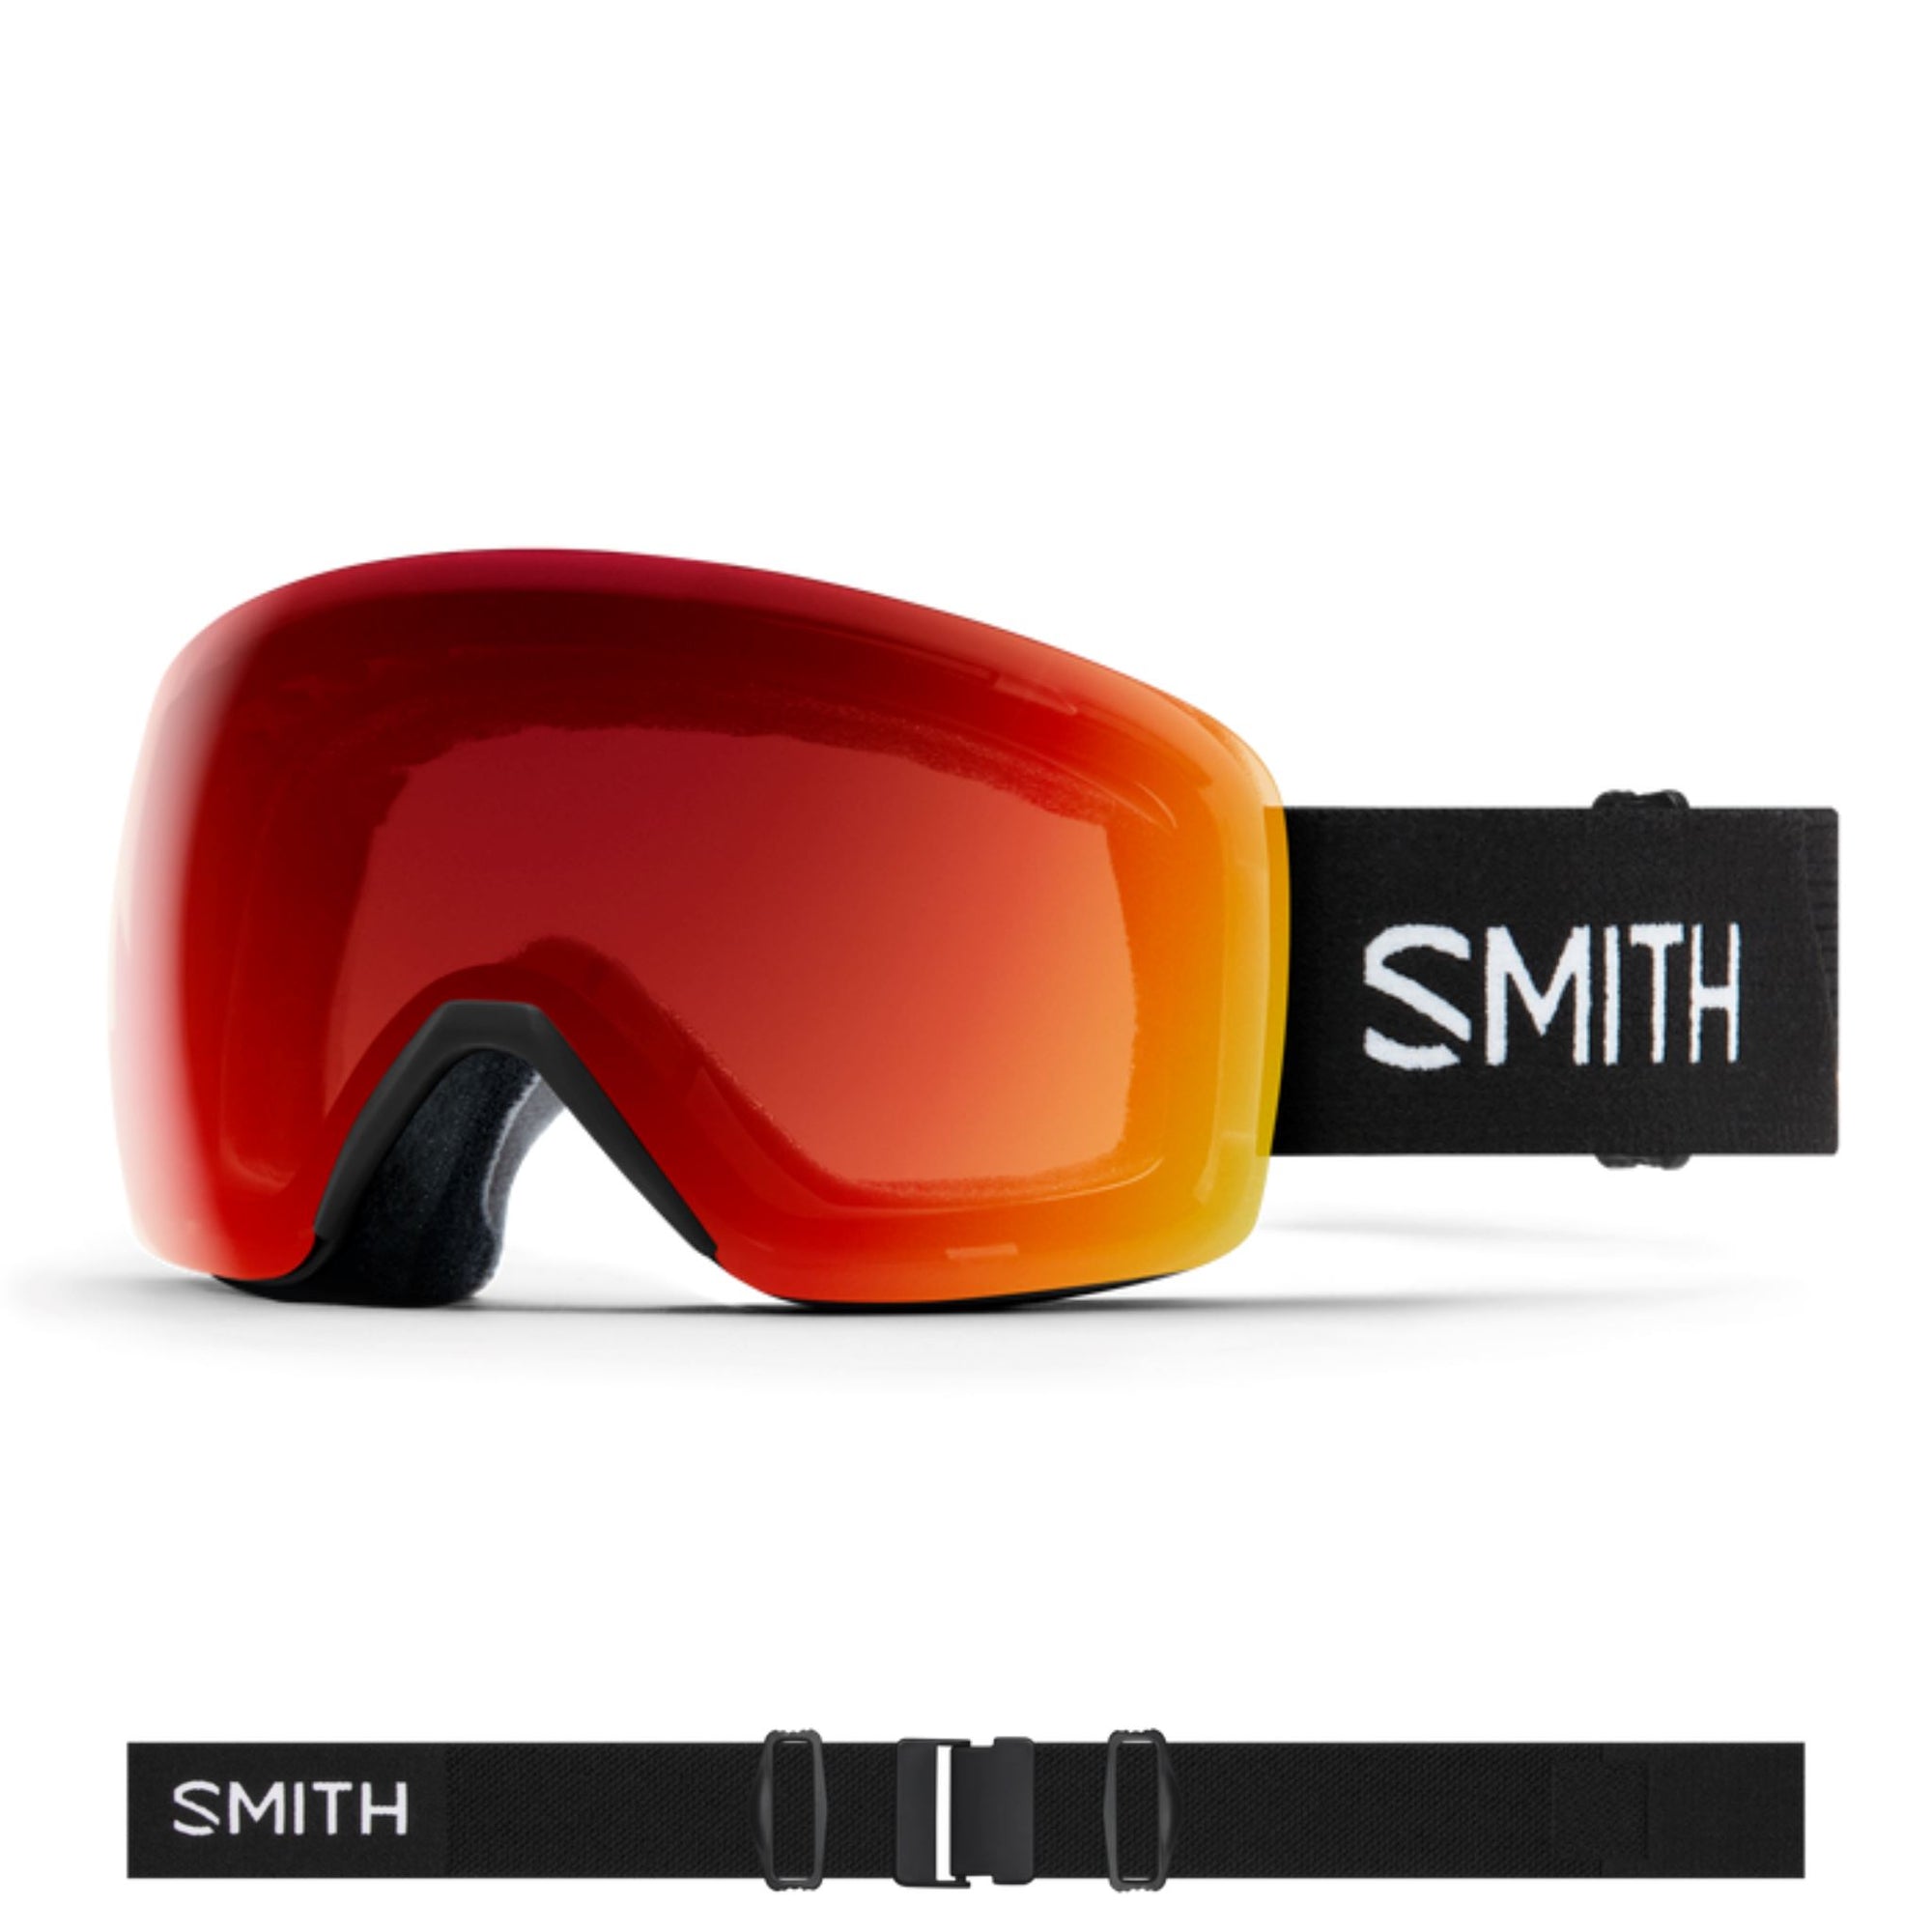 Smith Skyline Goggles (Medium Fit) - Black ChromaPop Photochromic Red Mirror Goggles Smith 